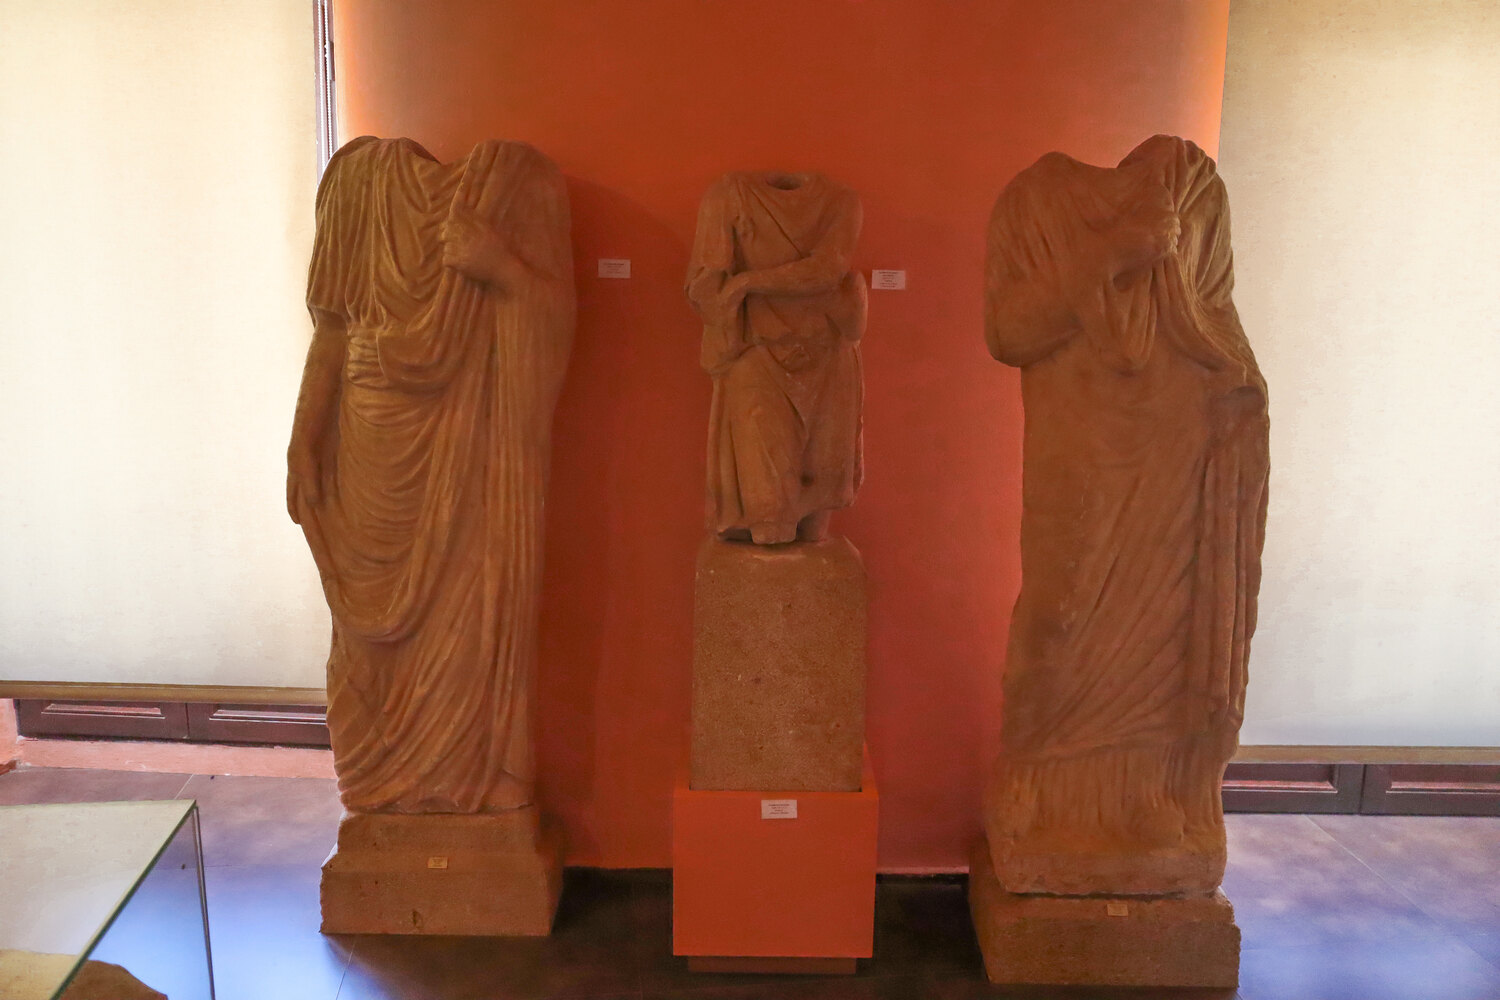 Historical statues inside the Palacio de Mondragon